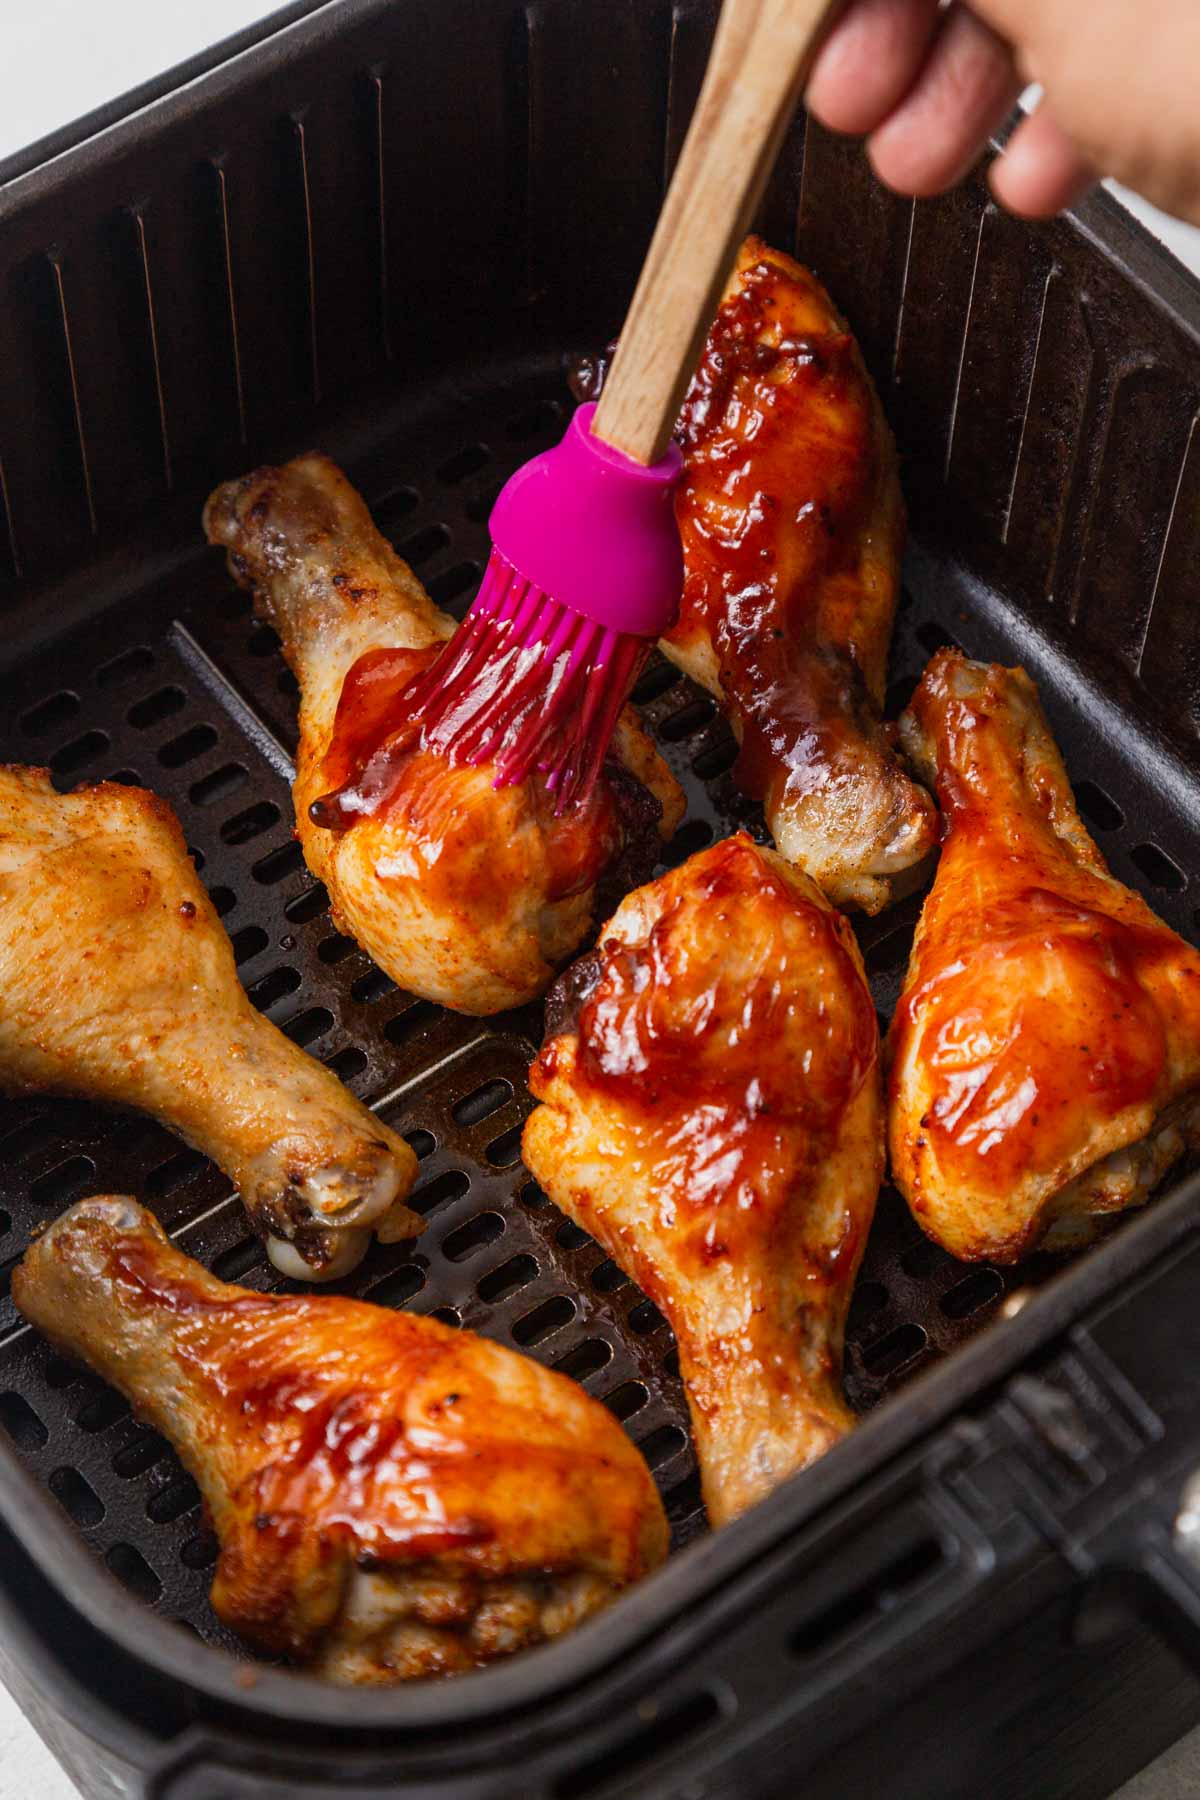 brushing bbq sauce onto the chicken legs.